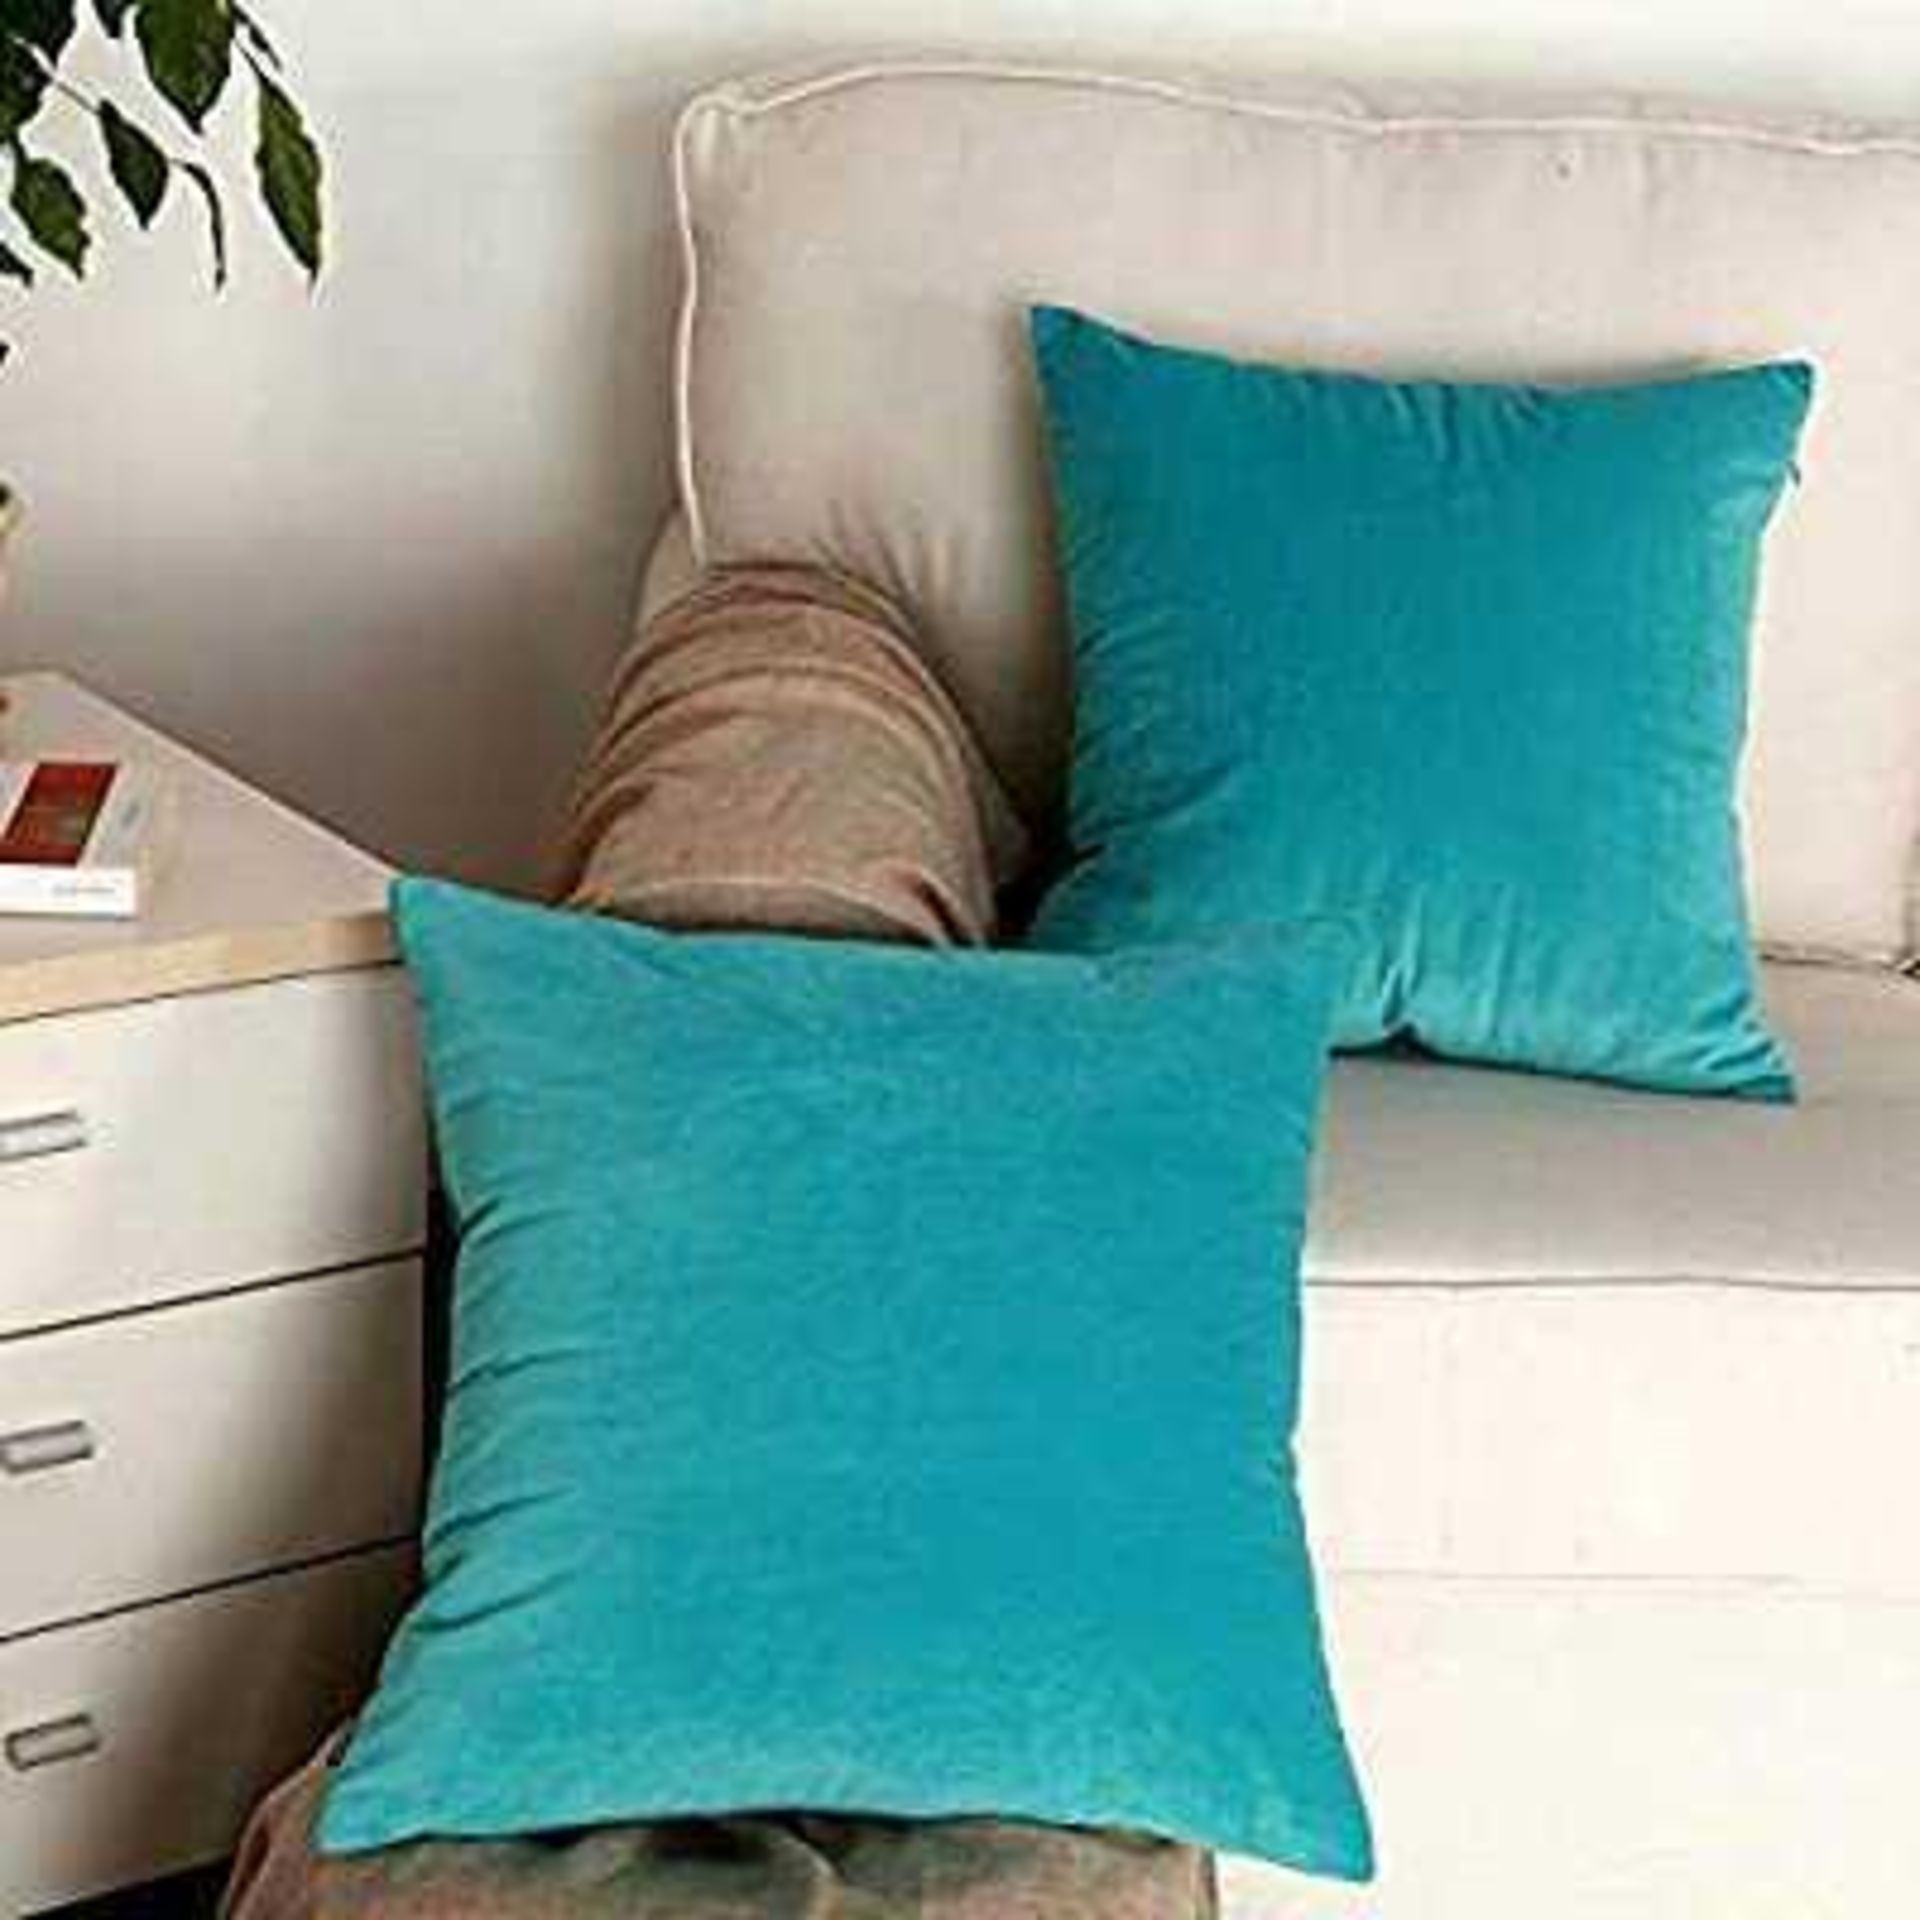 RRP £50 Each Designer John Lewis Loaf Squared Teal Blue Cushions